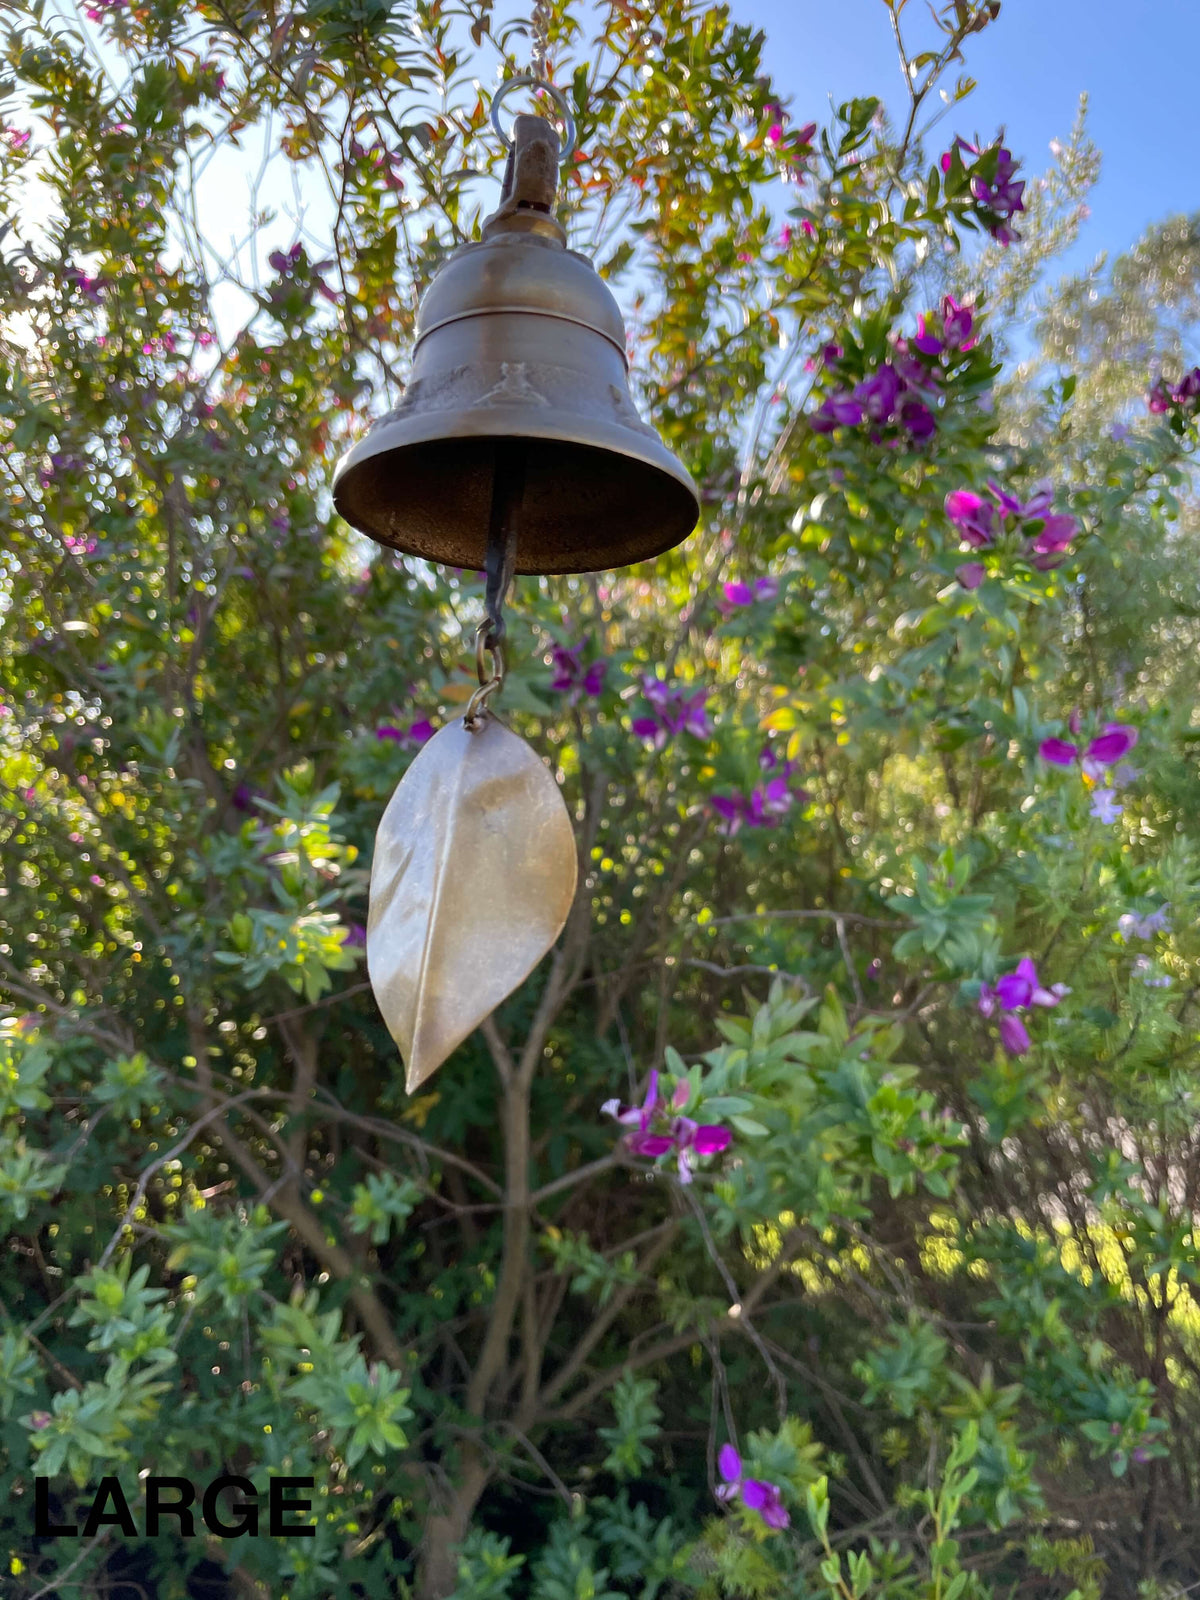 Brass Buddhist Bell Nepalese Wind Chime - Handmade In Nepal🇳🇵